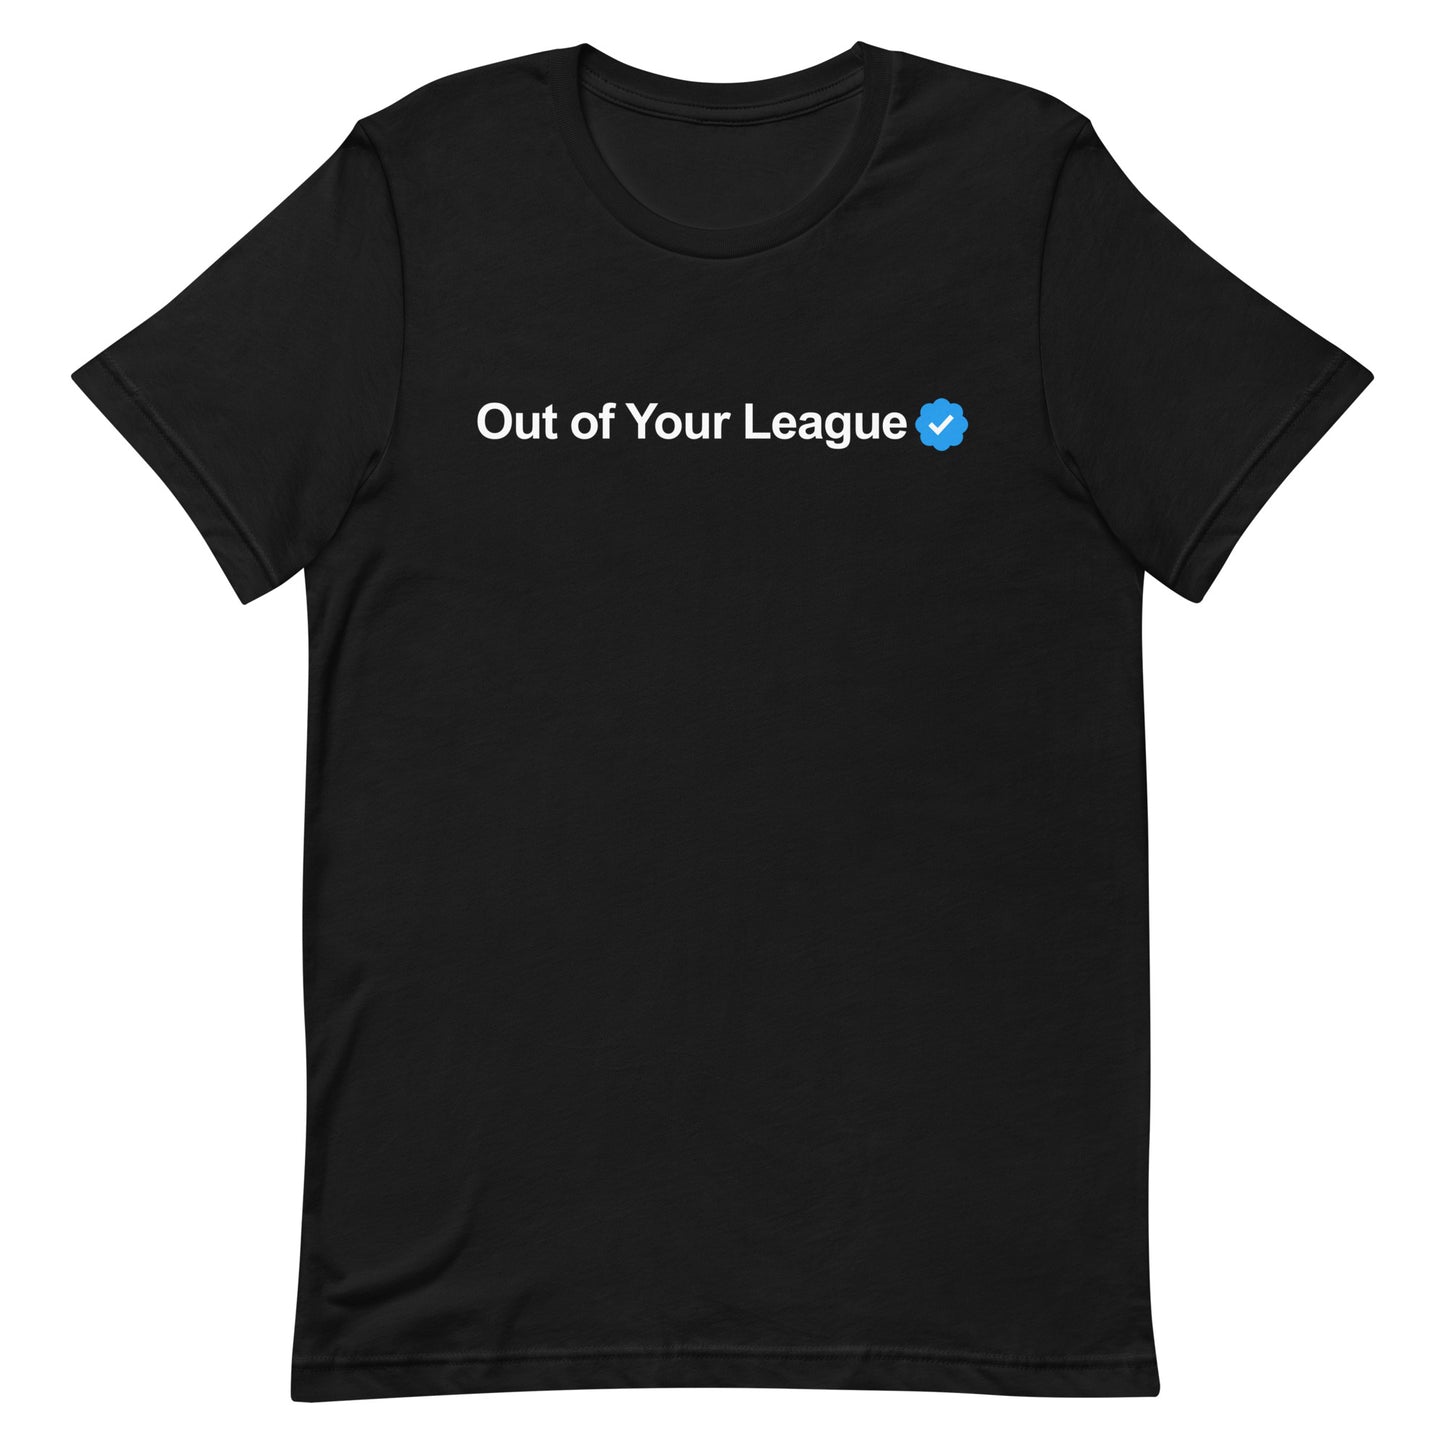 Out of Your League Unisex t-shirt